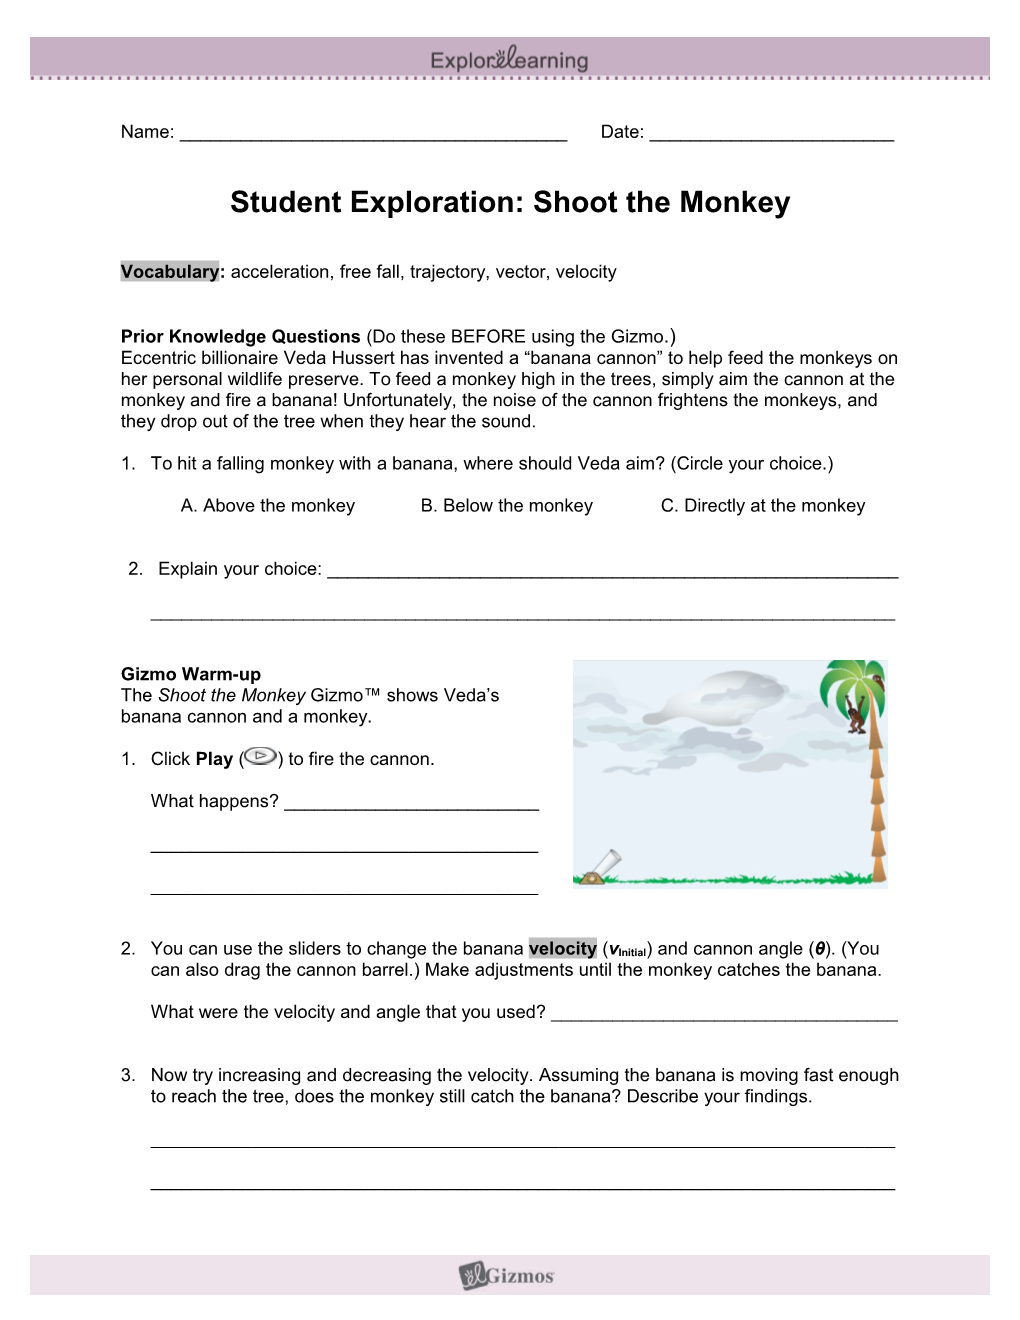 Student Exploration Sheet: Growing Plants s8